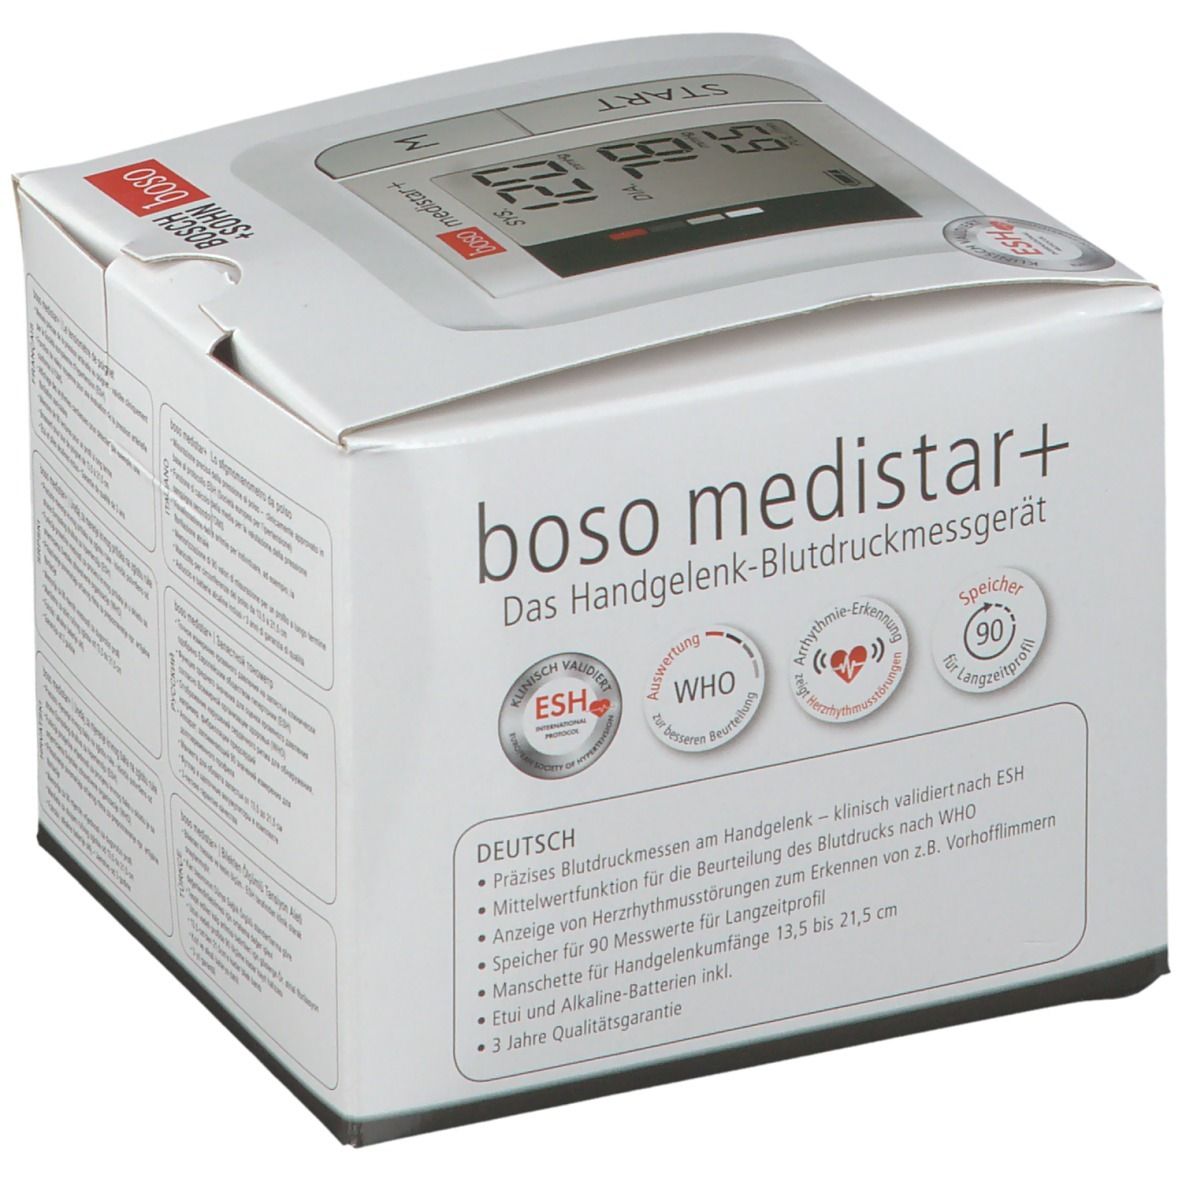 Boso Medistar plus